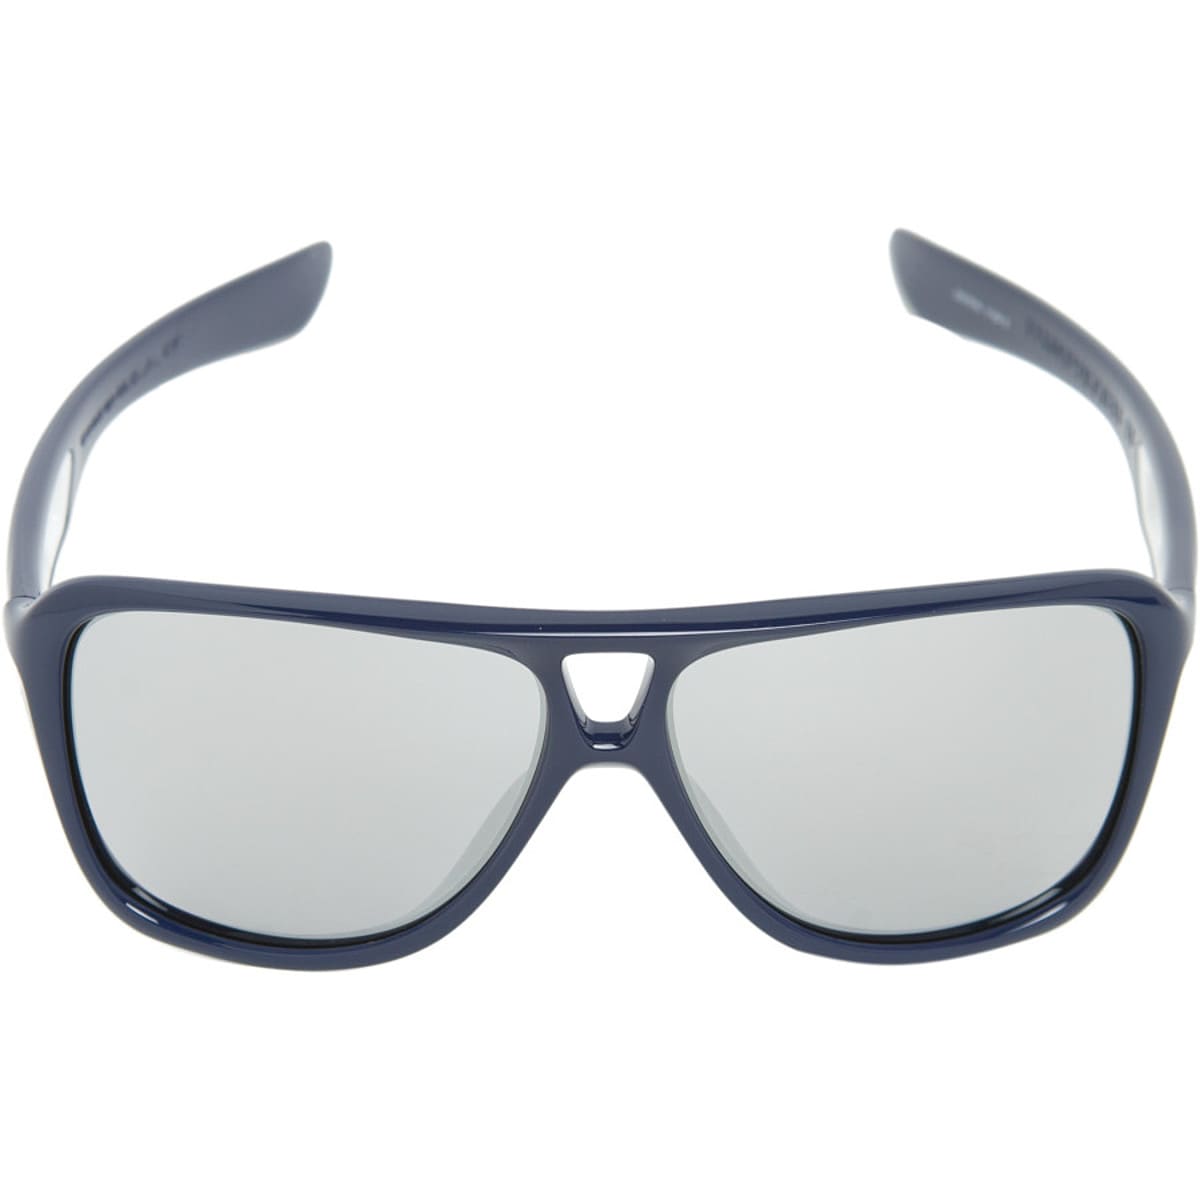 Oakley Dispatch II Sunglasses - Accessories